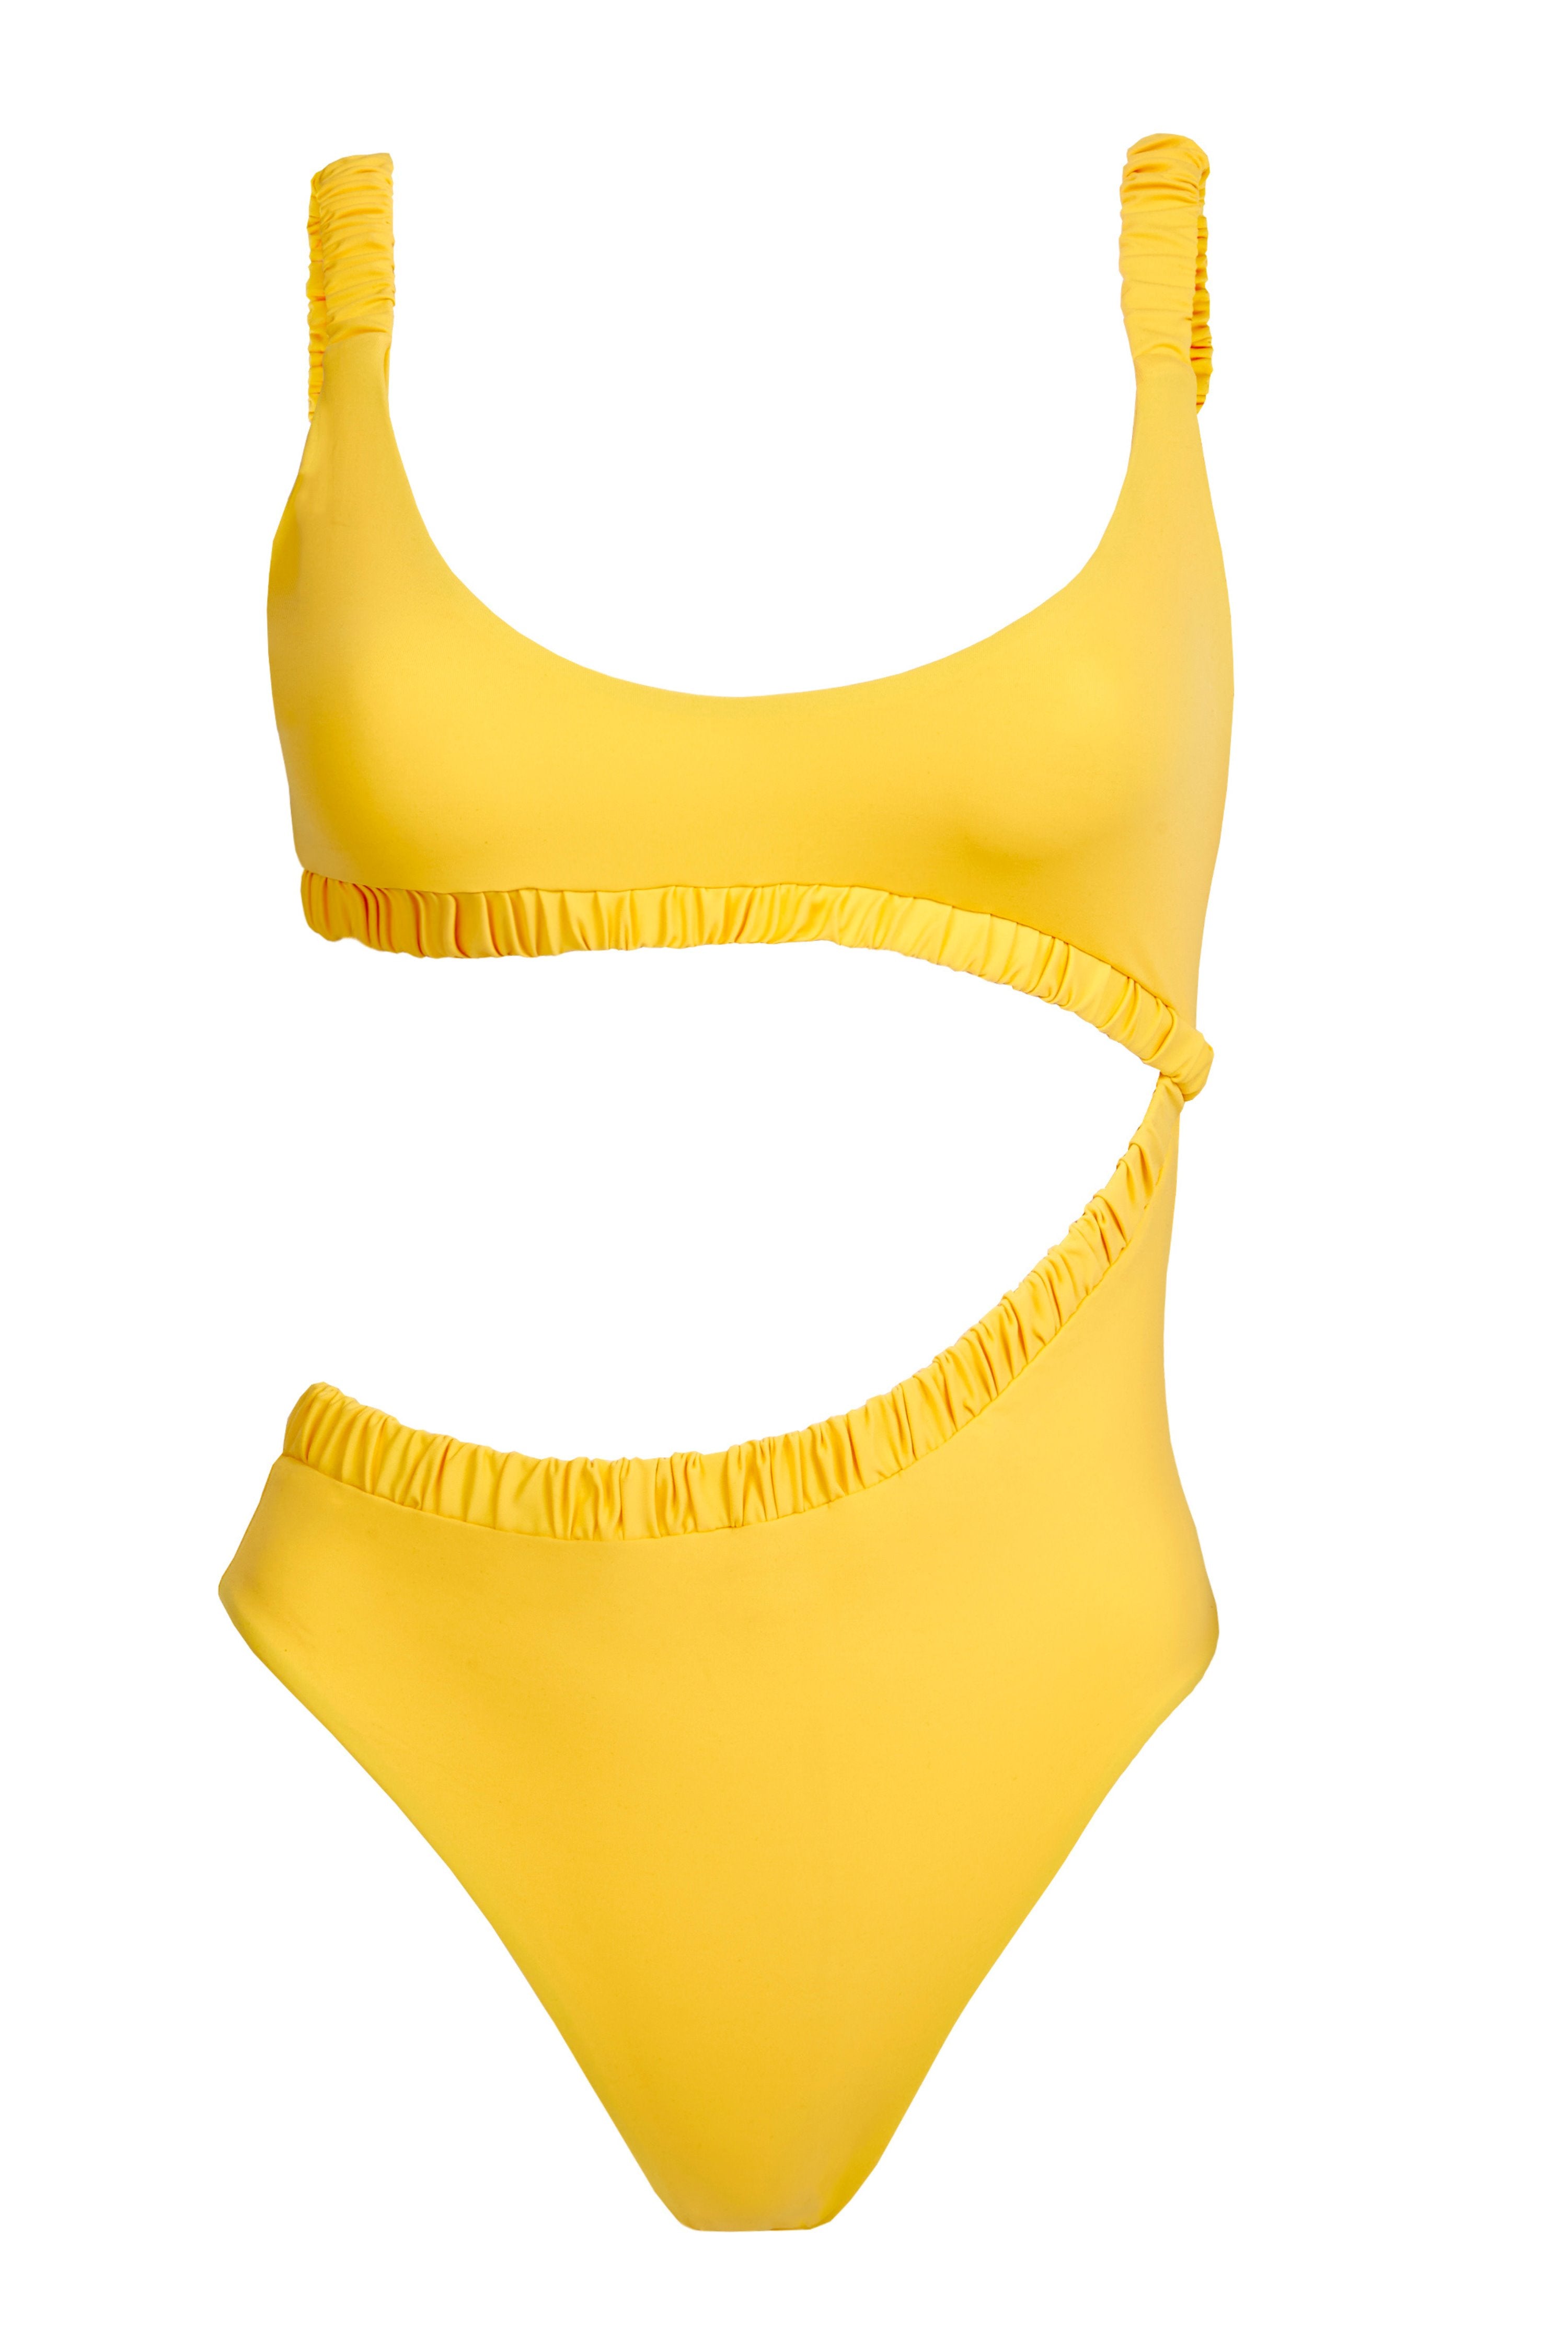 Daphne in Sunflower Yellow One-Piece Swimsuit Arloe 